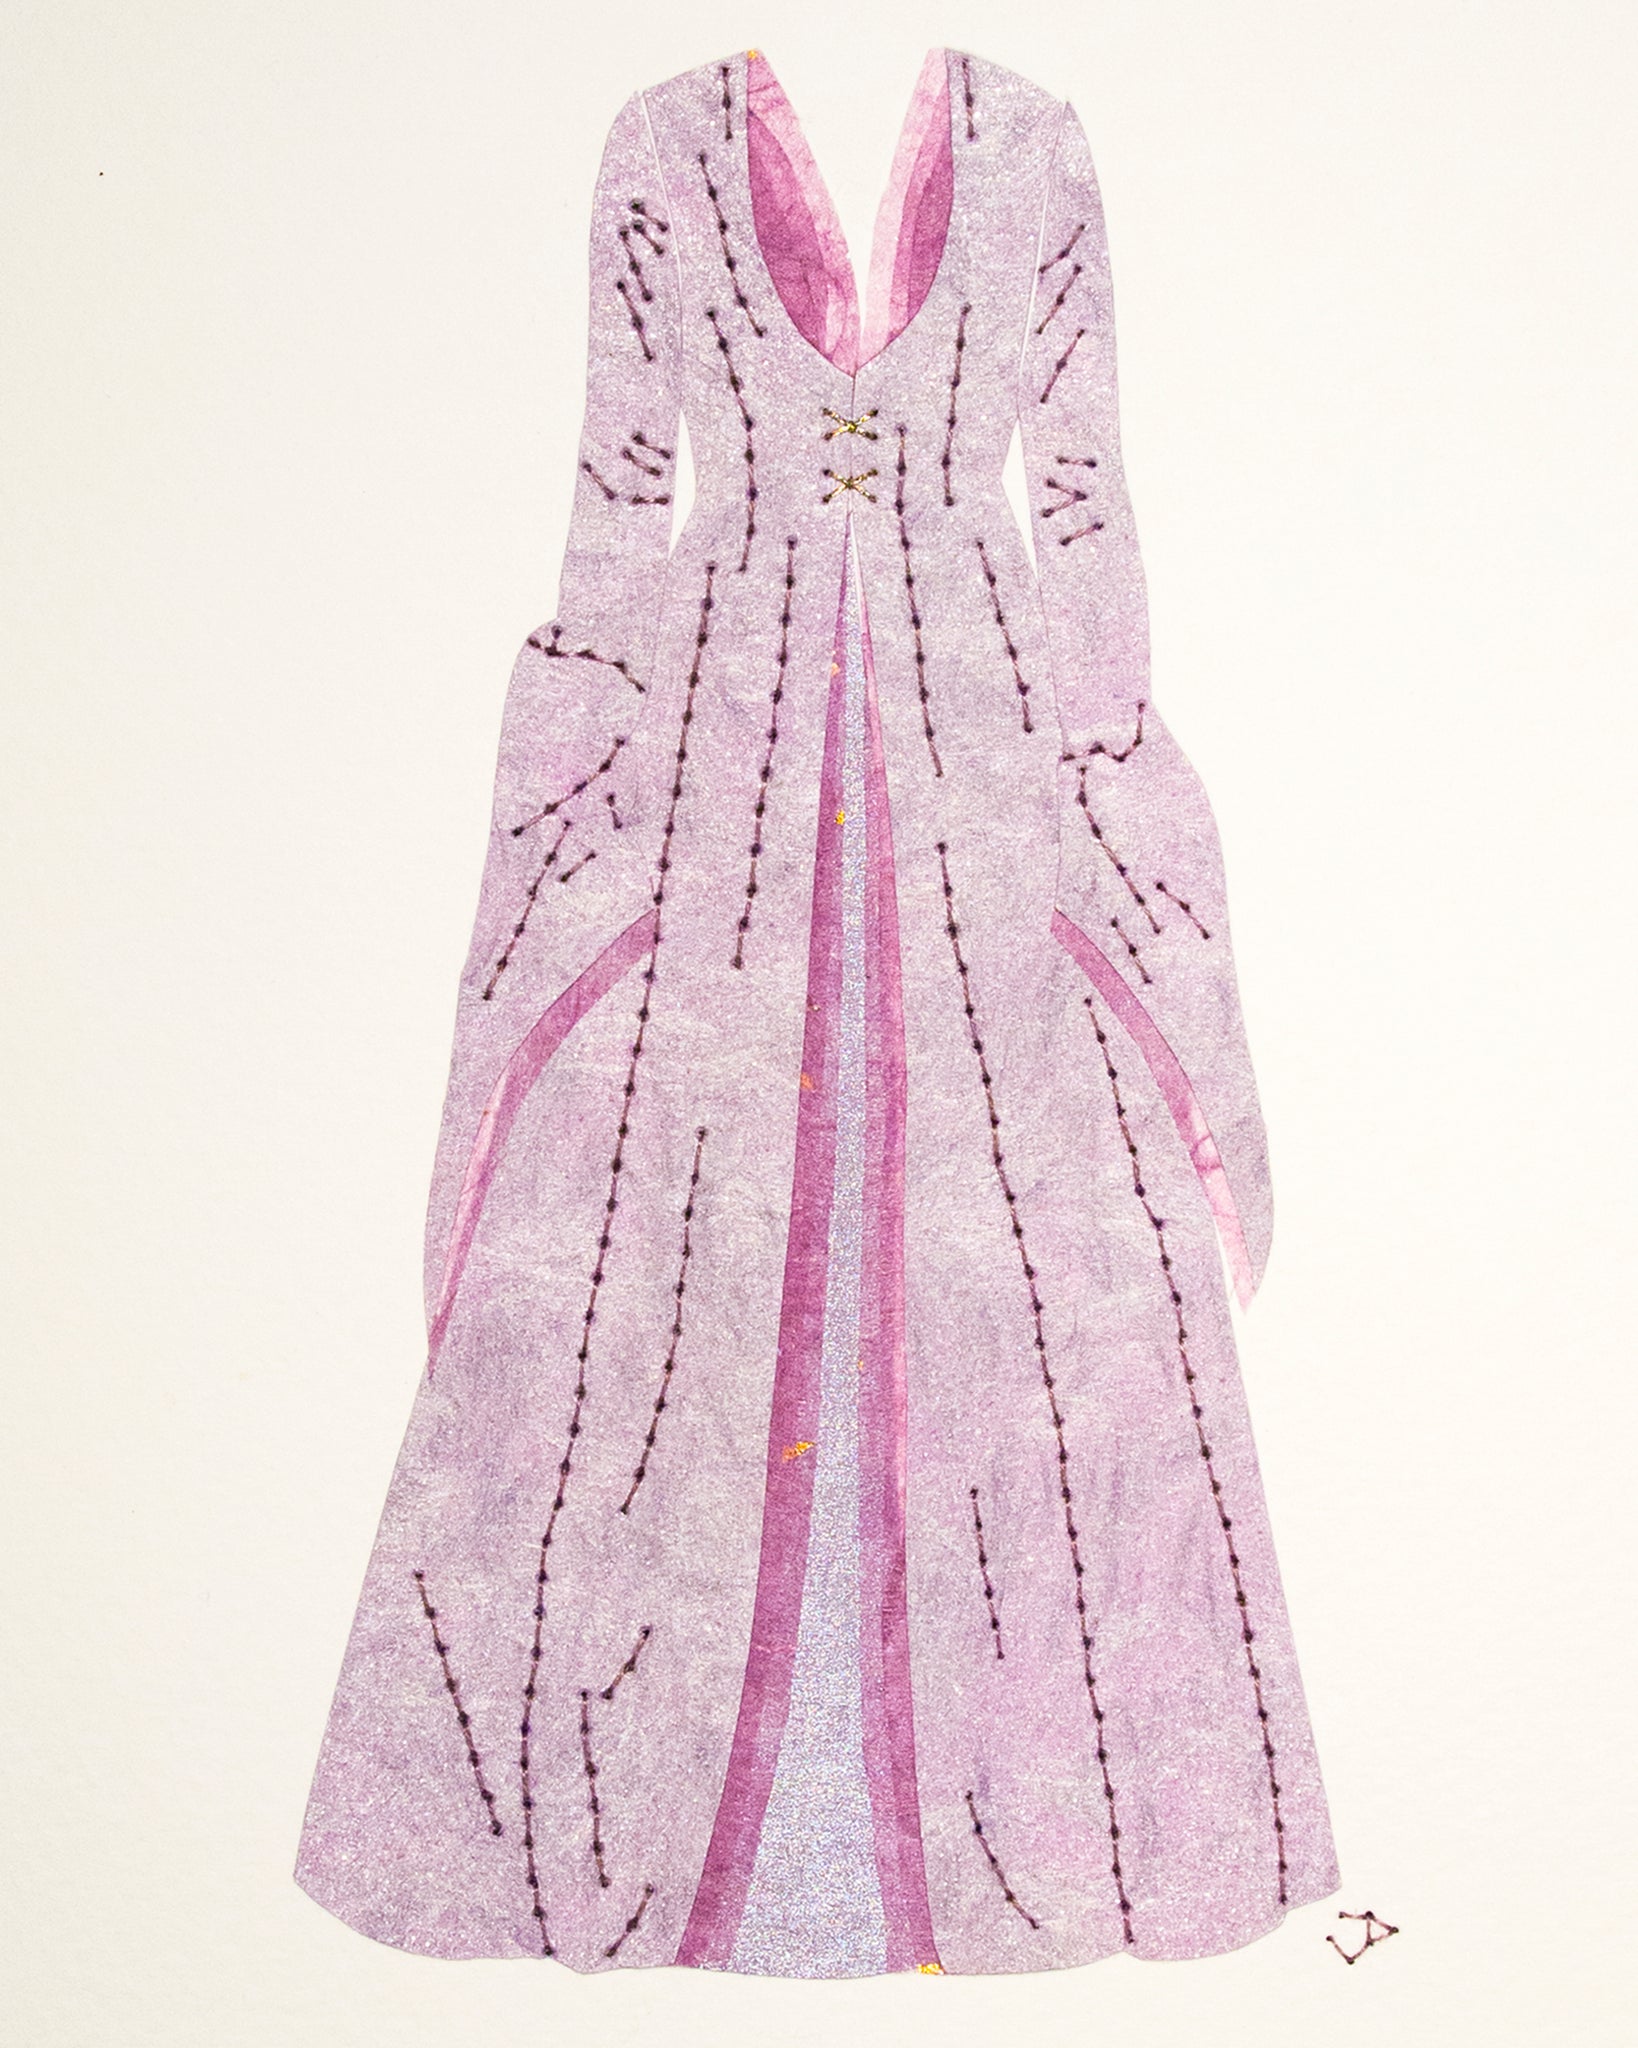 Dress #046: Sansa Stark costume in purple. 2016